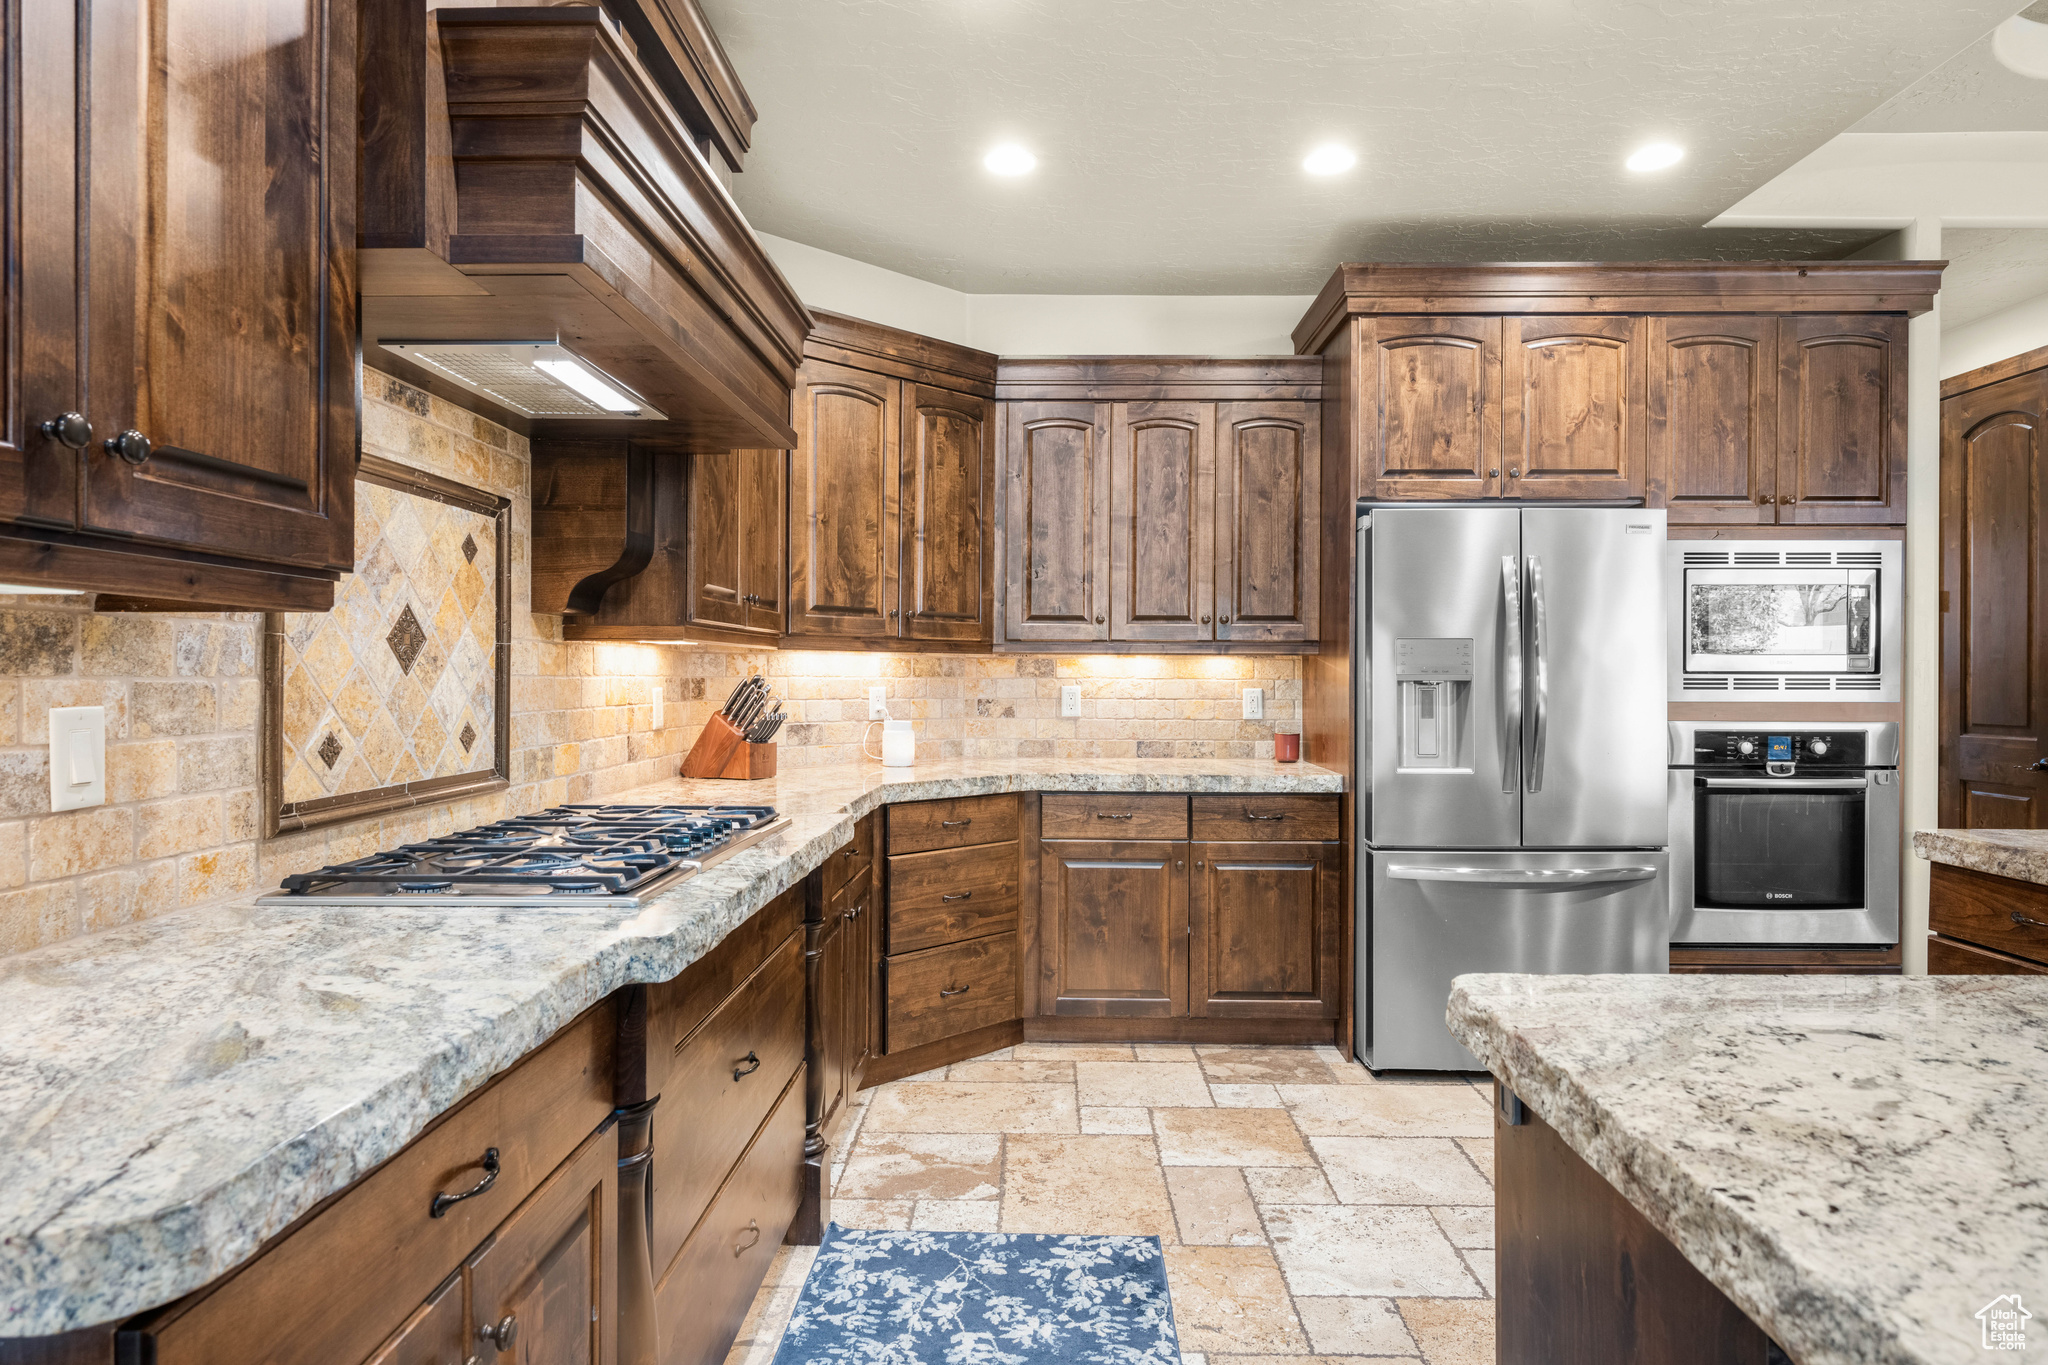 Kitchen with light stone counters, light tile floors, tasteful backsplash, stainless steel appliances, and custom range hood